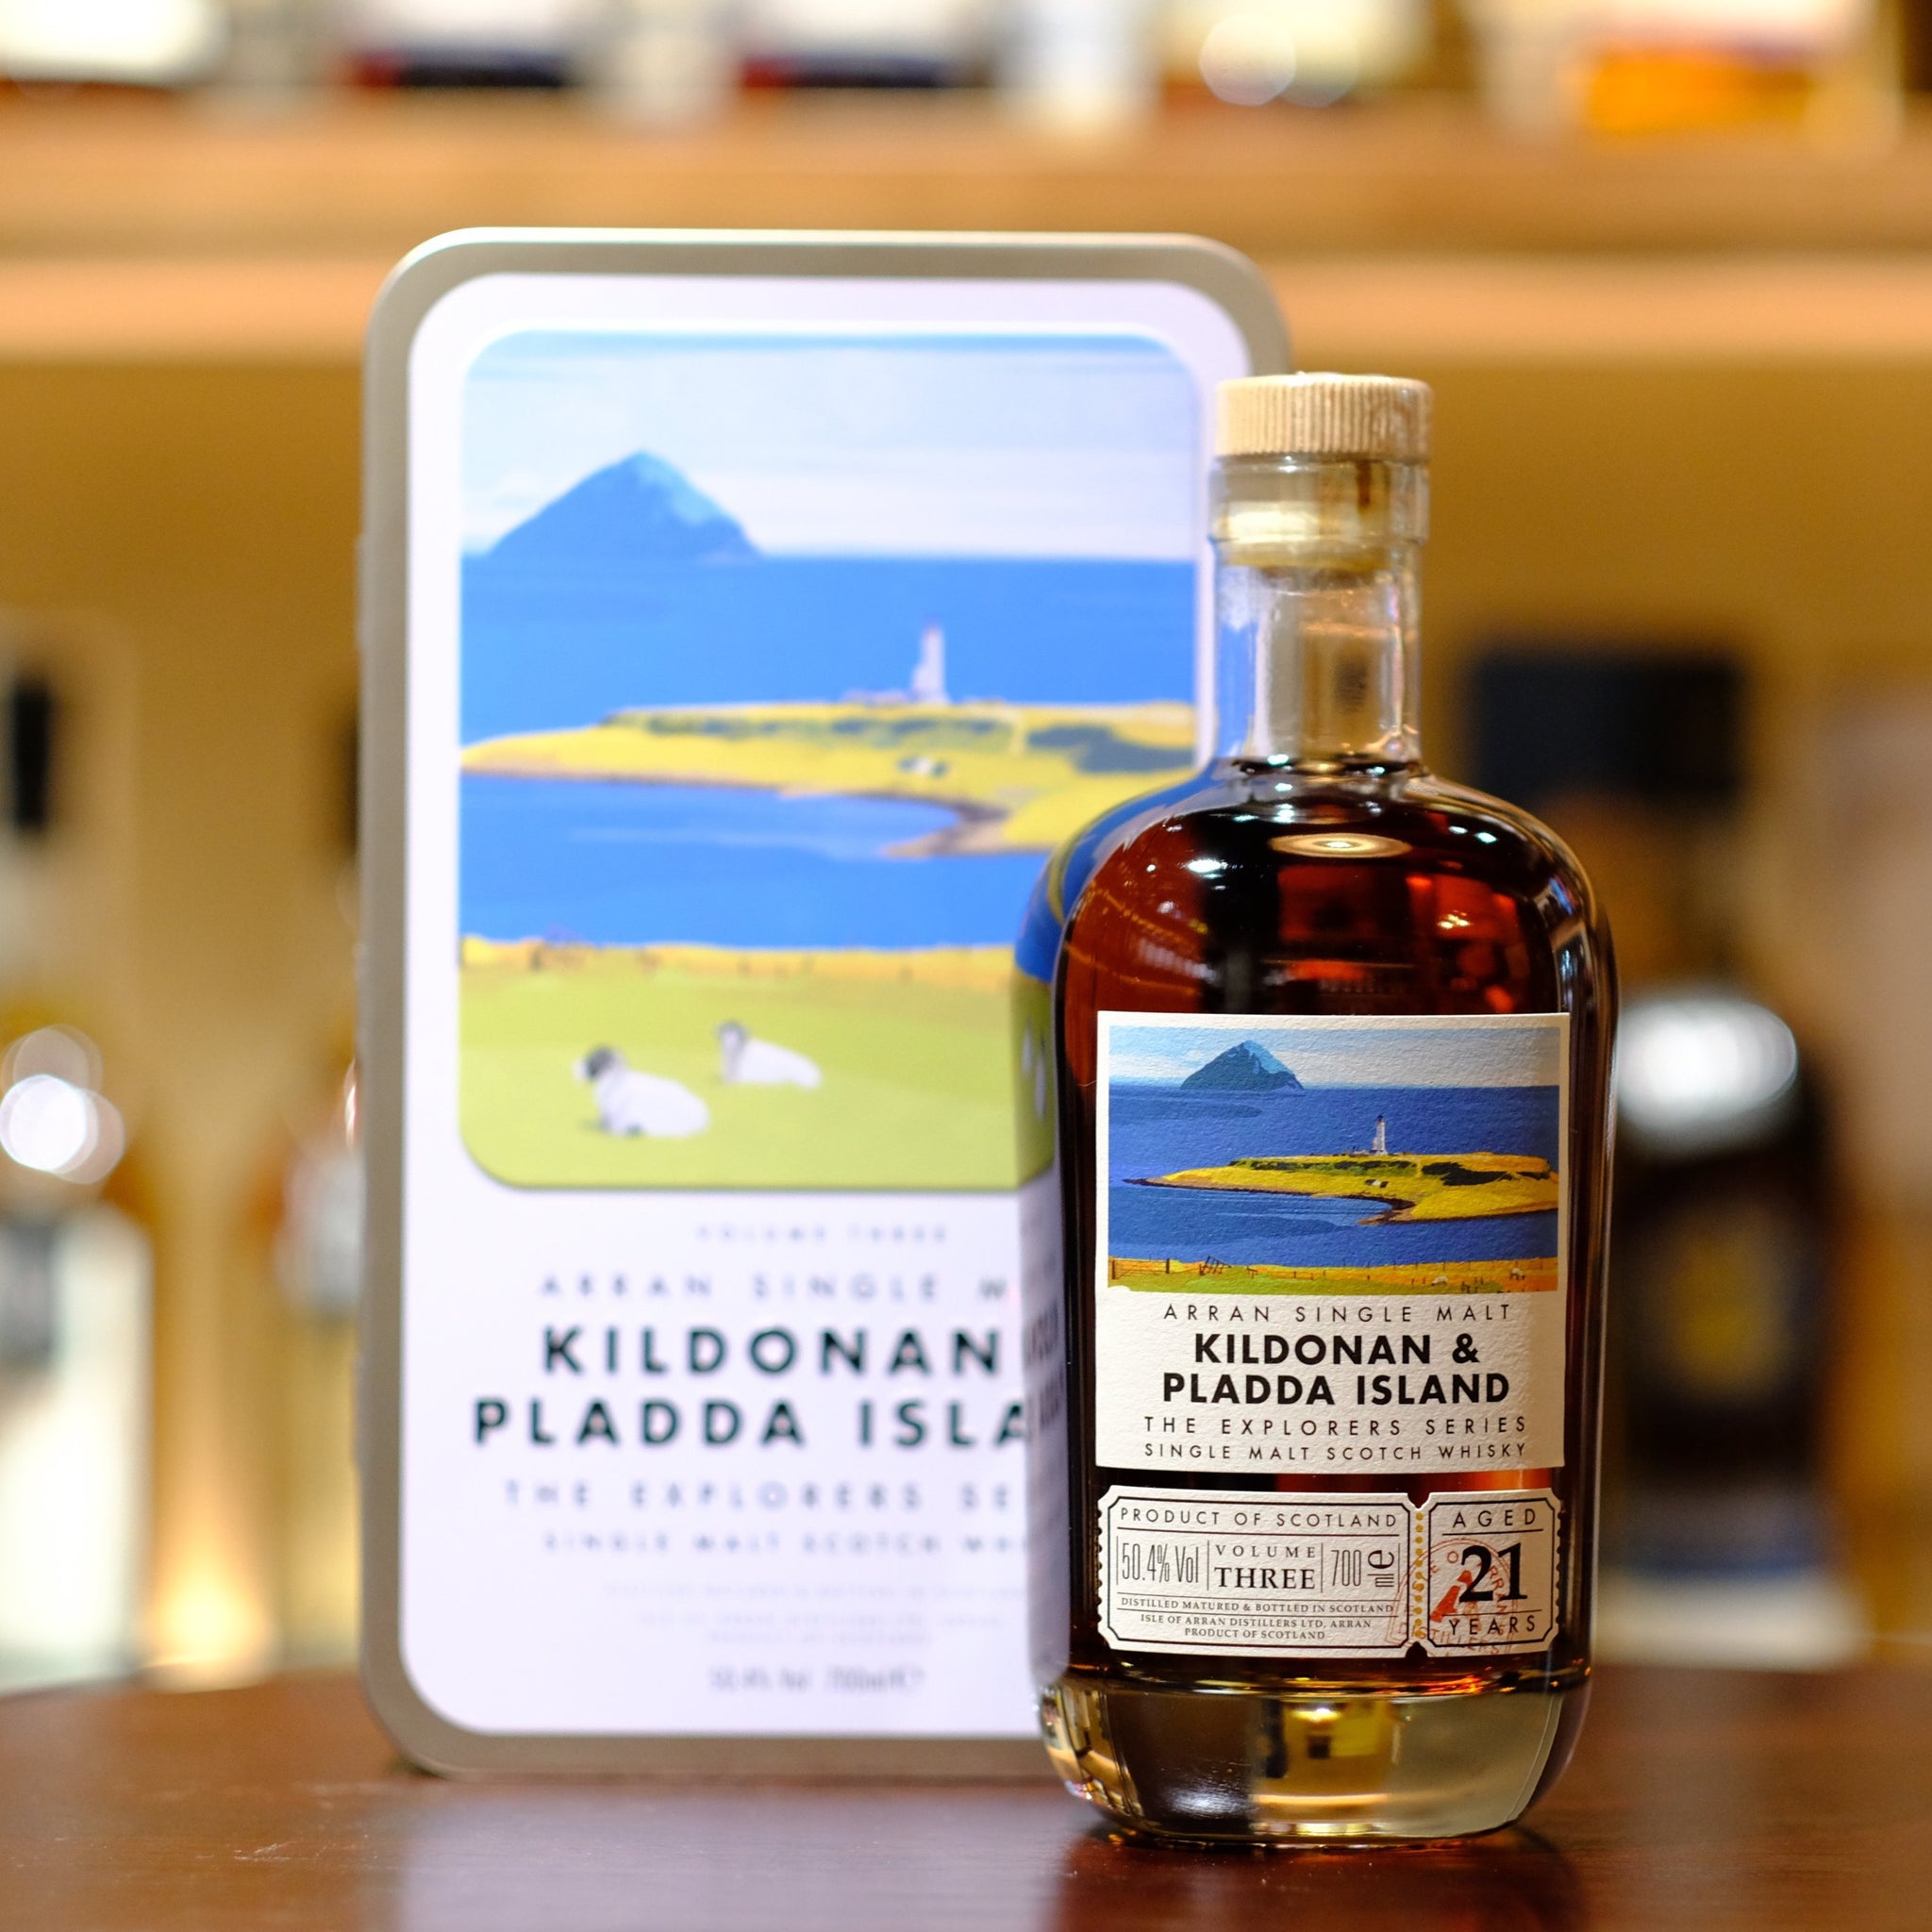 Arran 21 Year Old The Explorers Series Volume 3 - Kildonan & Pladda Island Single Malt Scotch Whisky